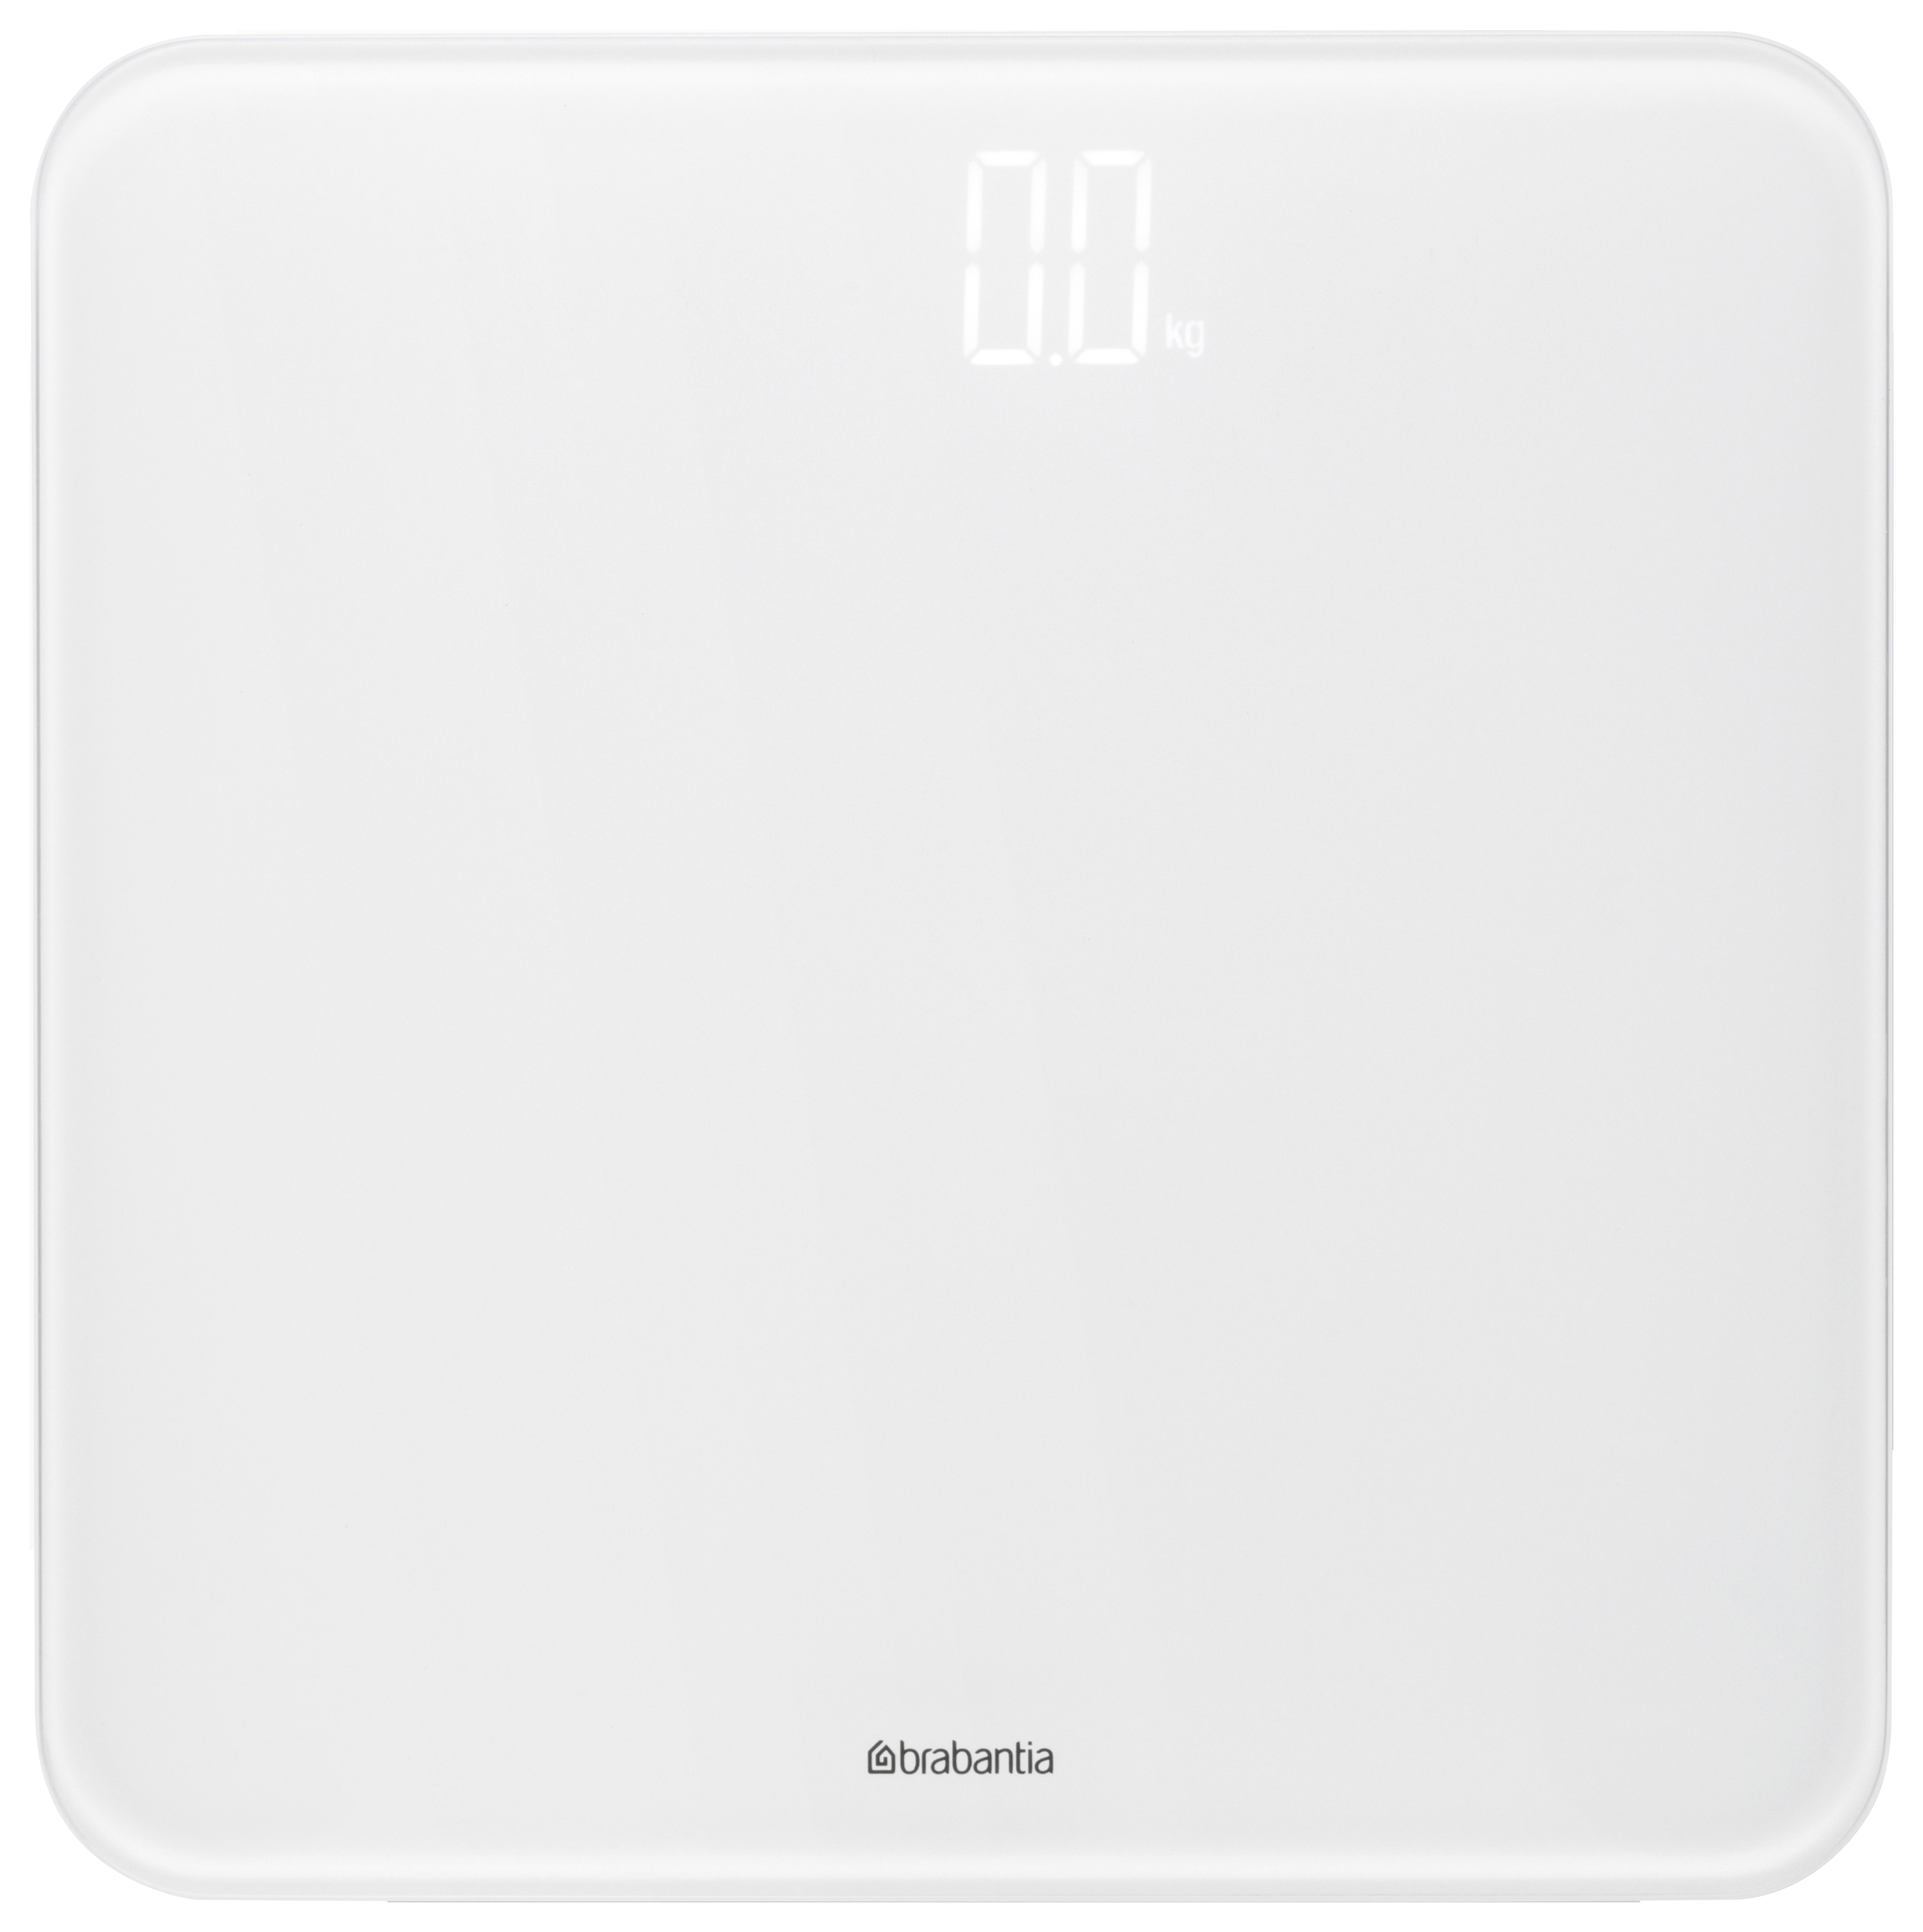 Brabantia ReNew Digital Bathroom Scales - White